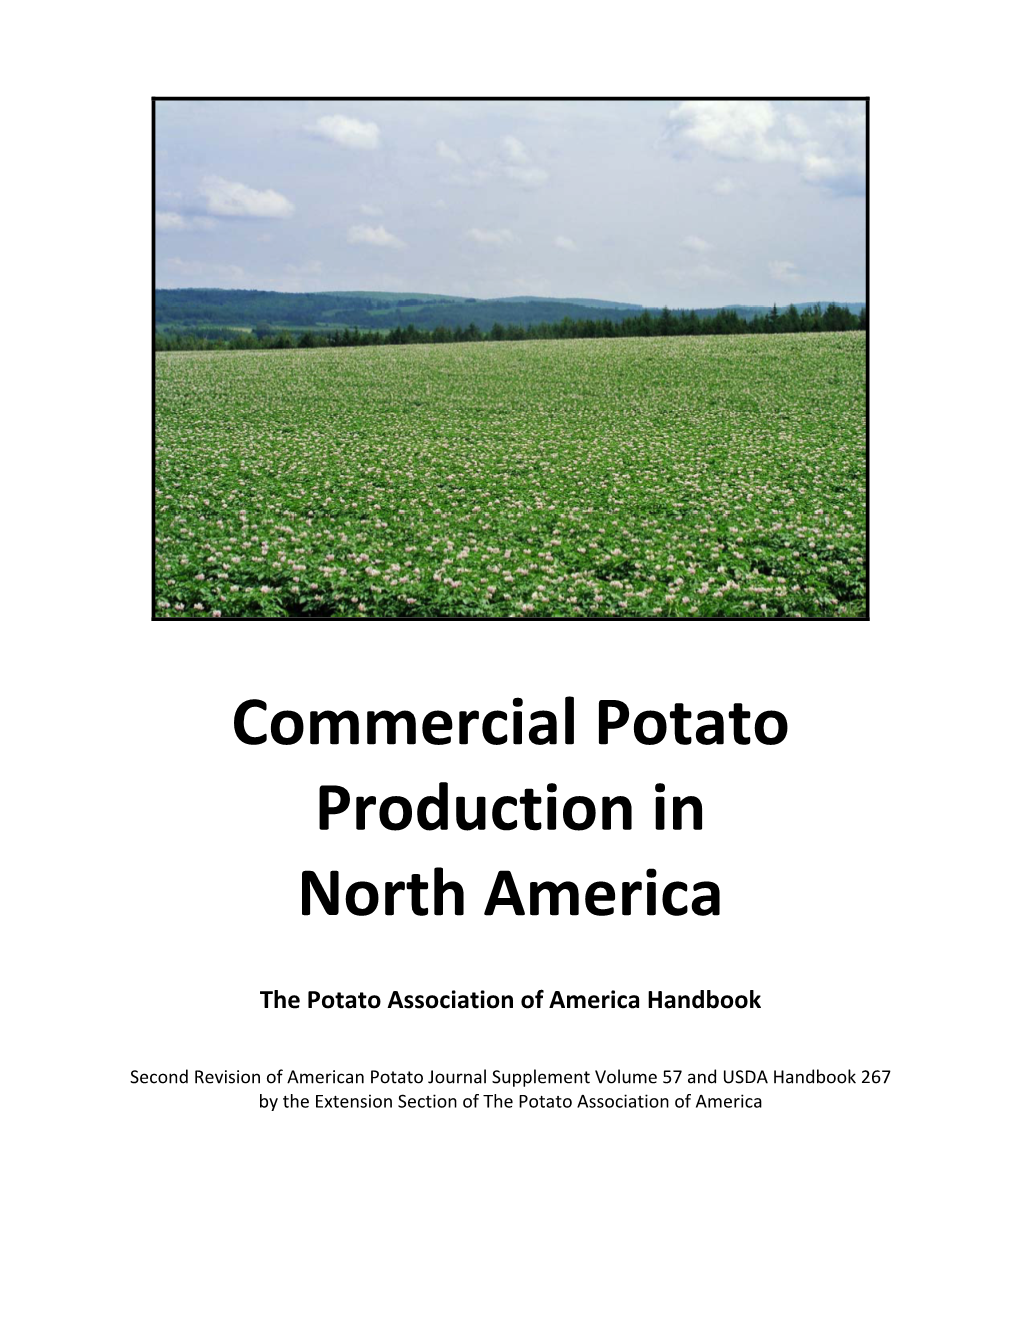 Commercial Potato Production in North America Handbook